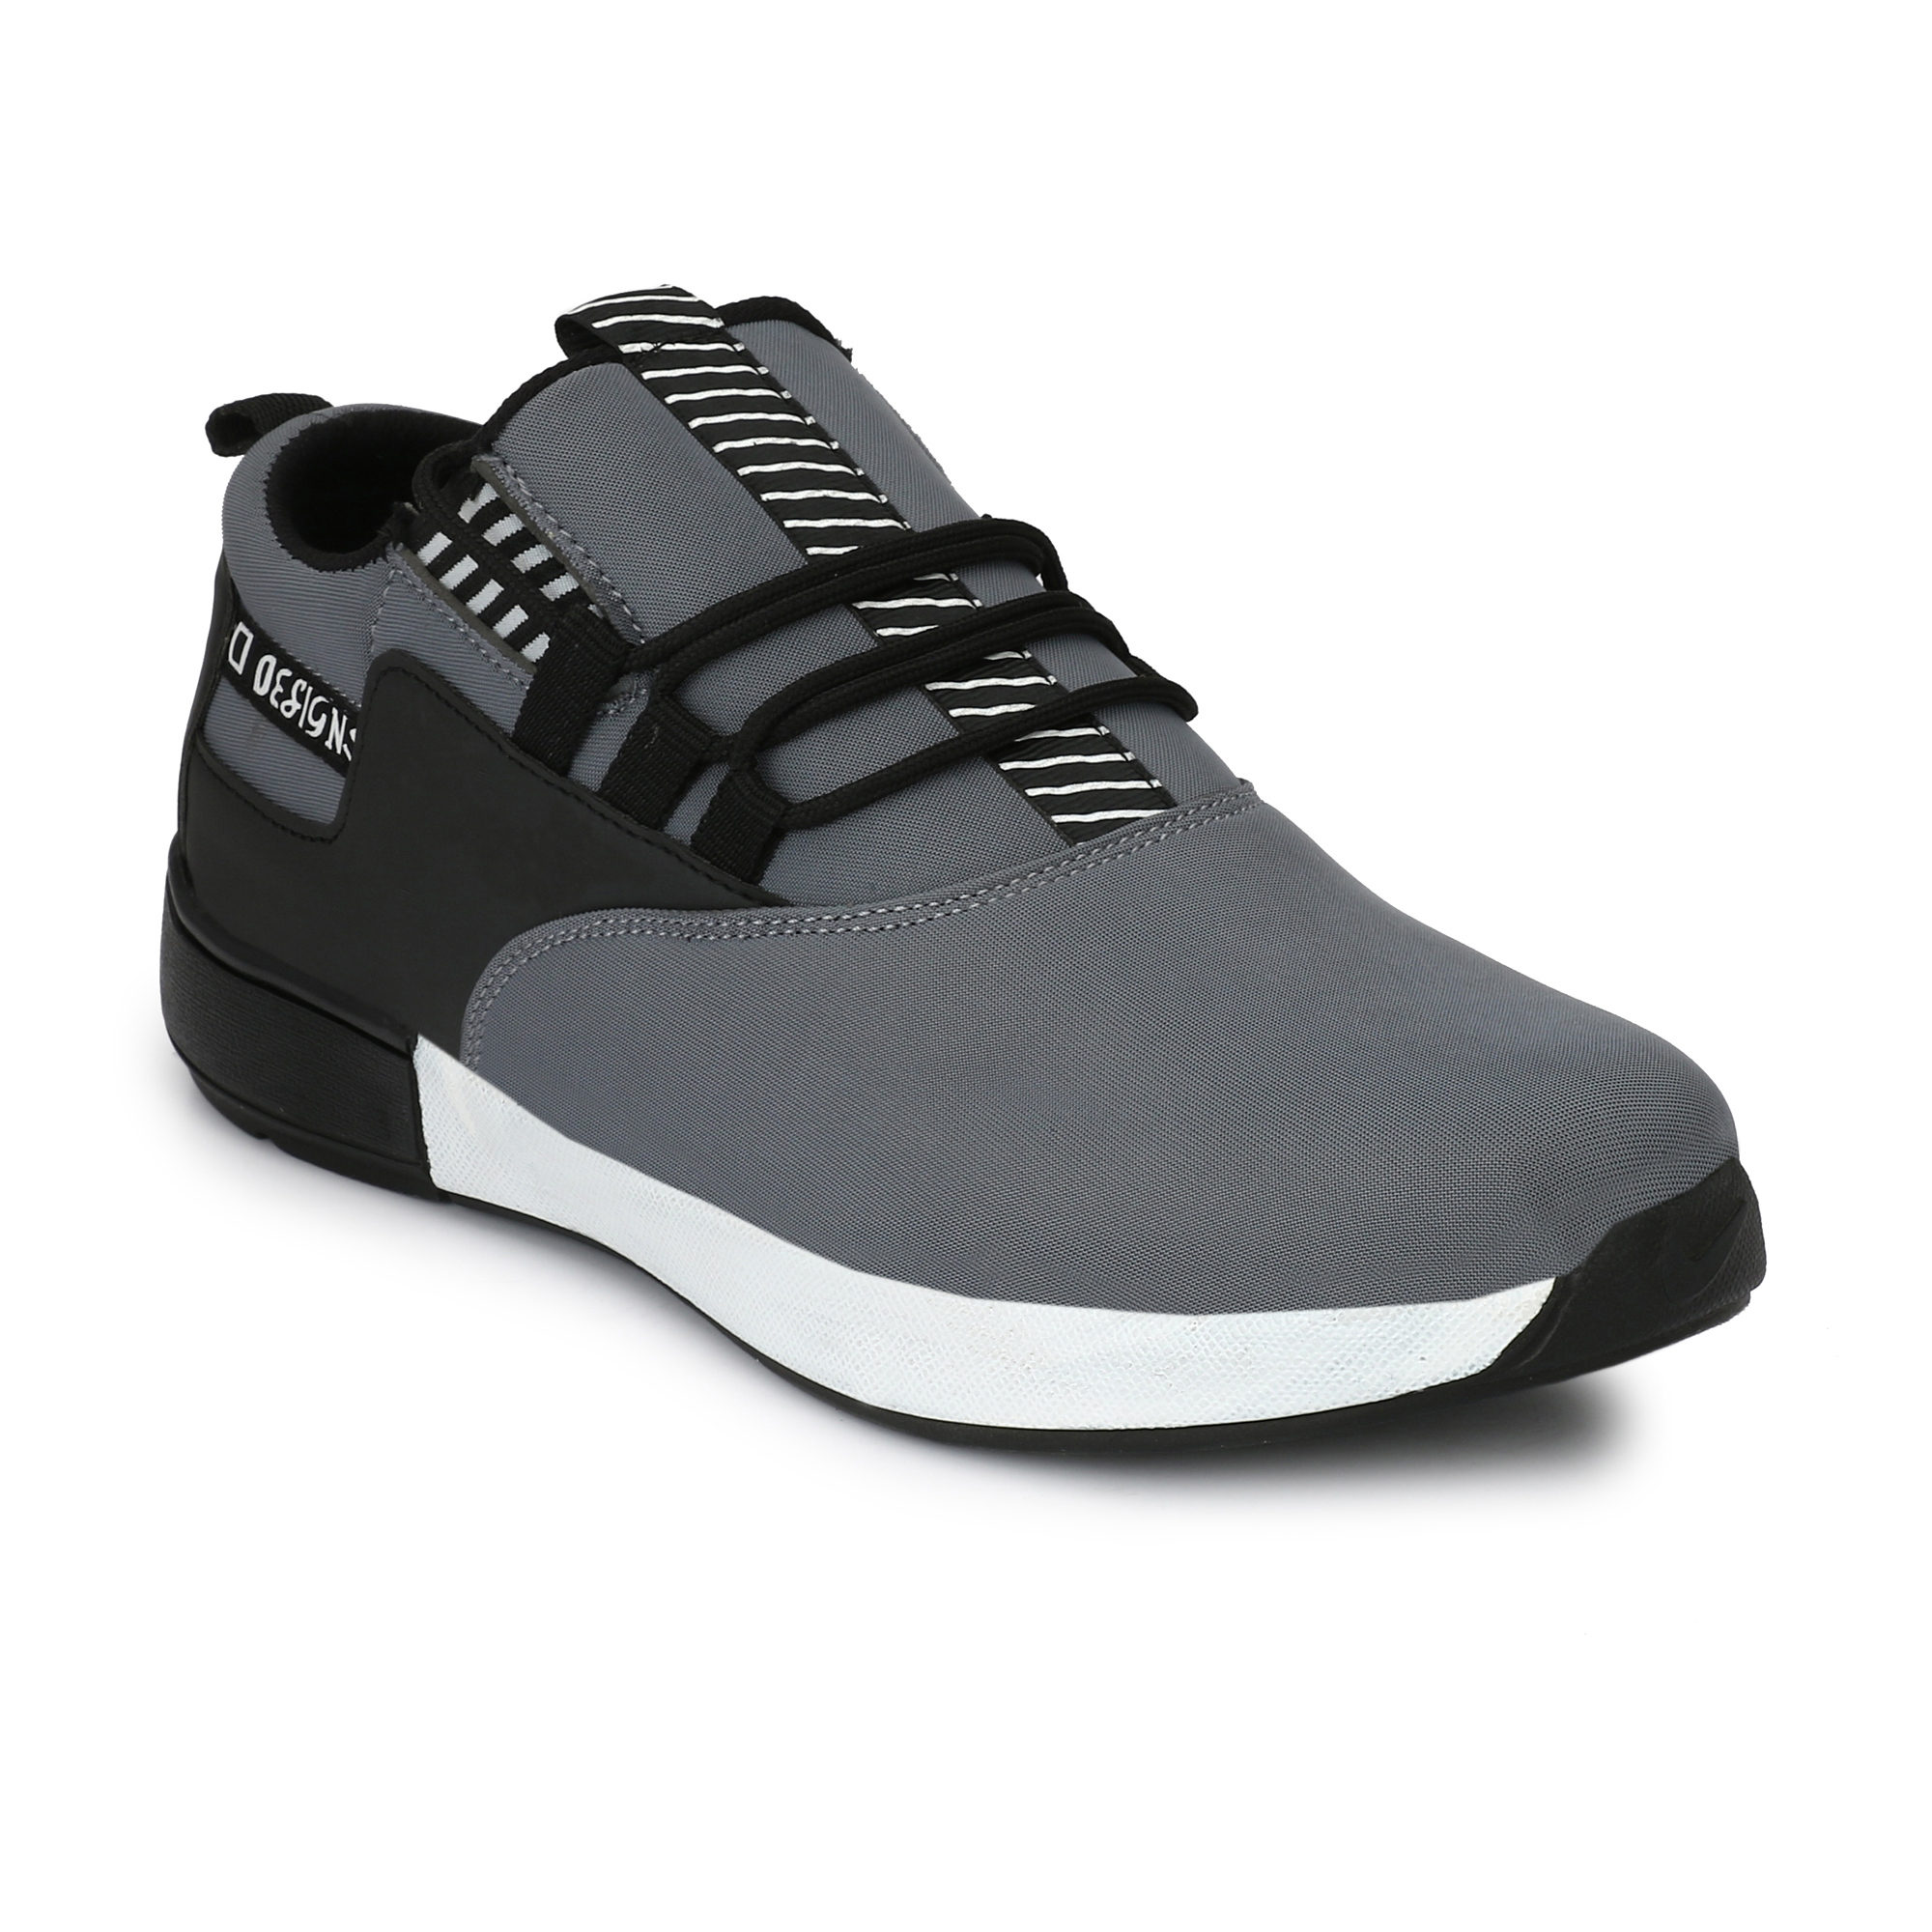 Buy Bradlan men's hao gray casual shoe Online @ ₹599 from ShopClues